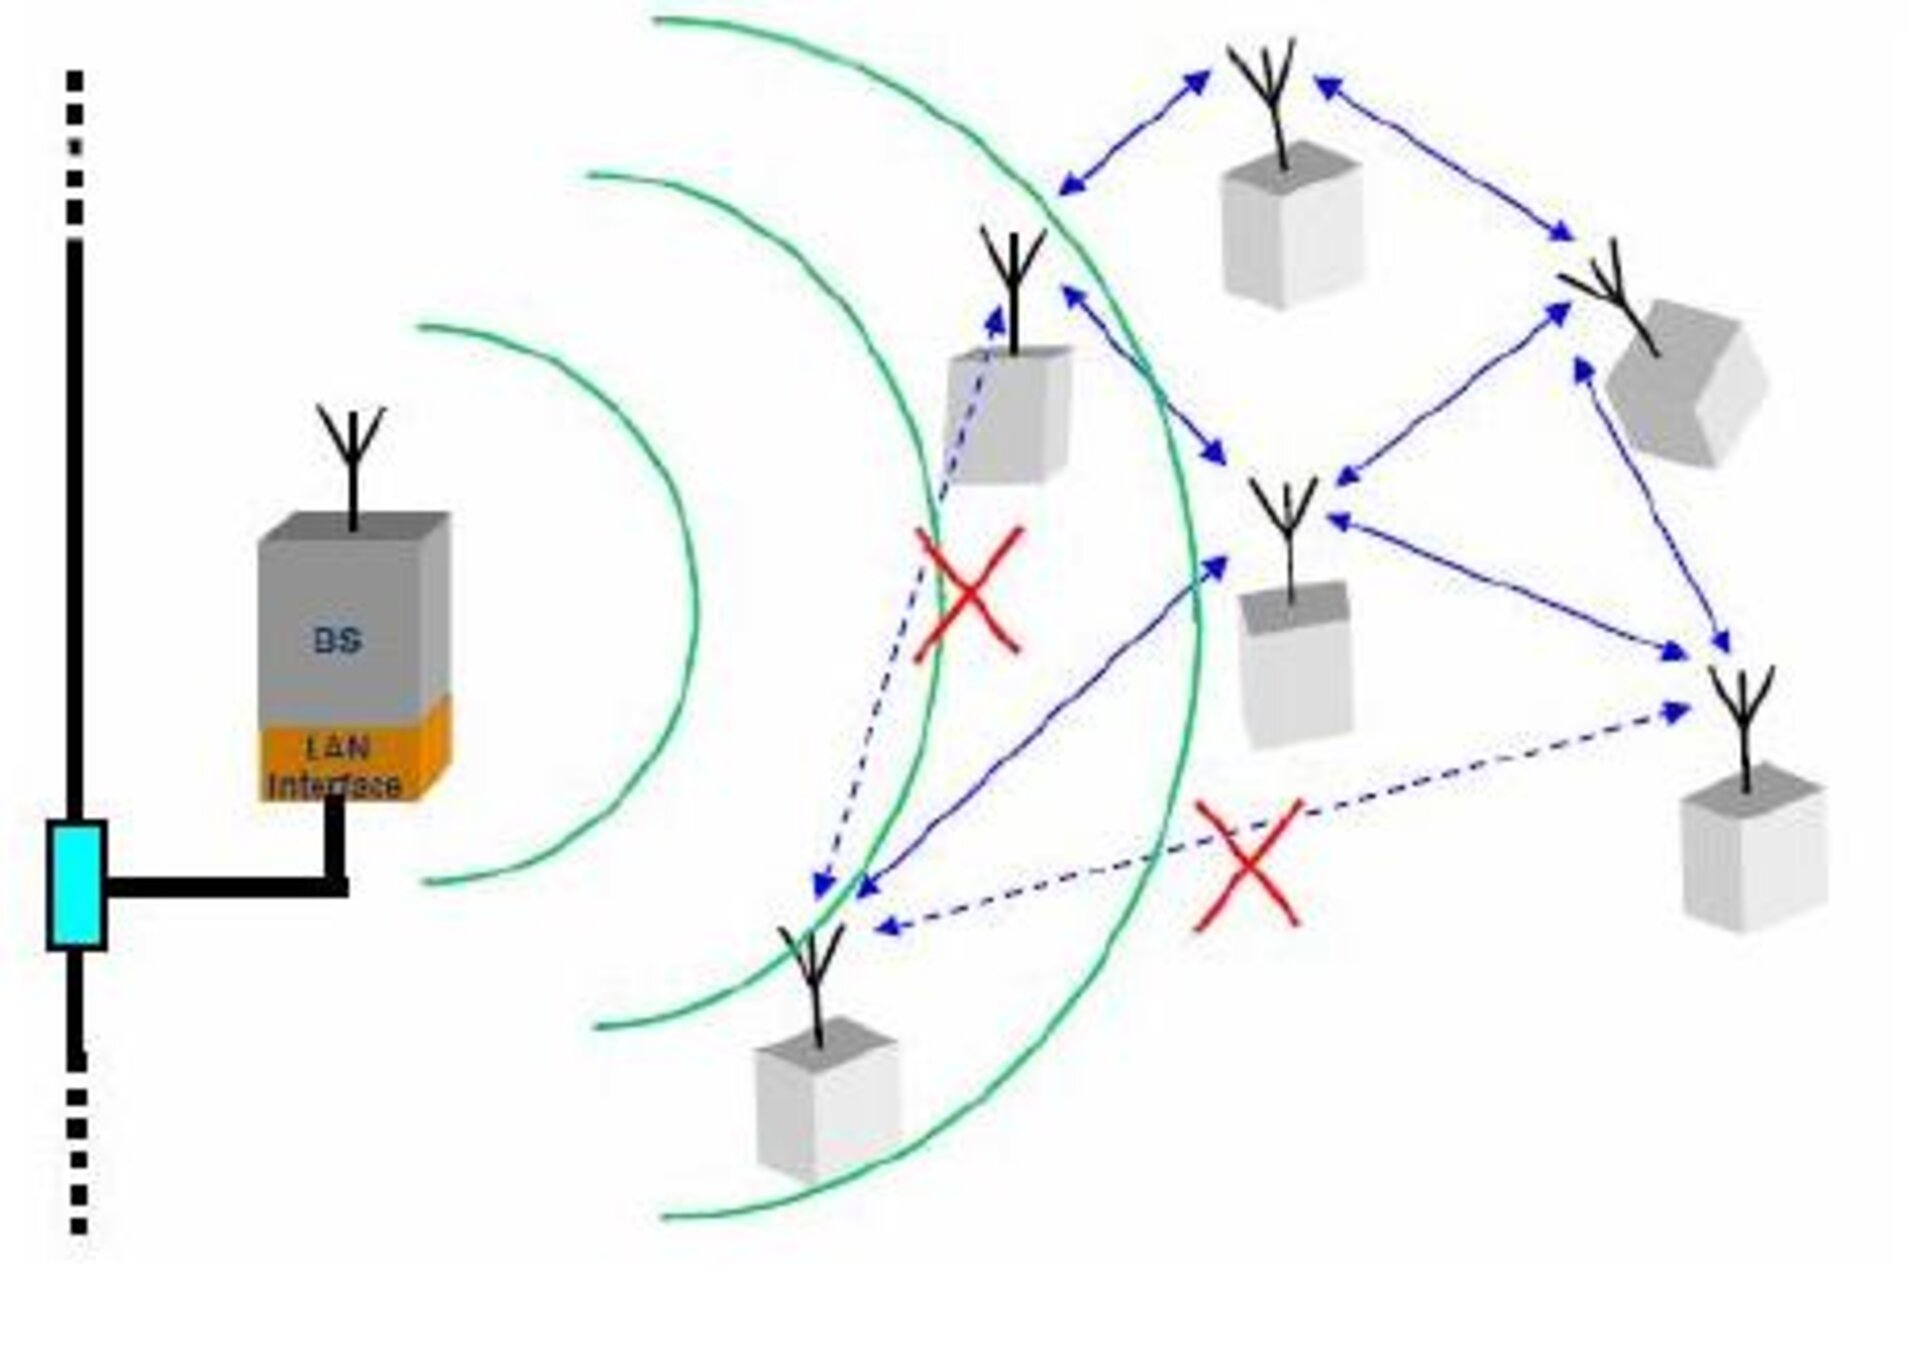 Microsensors forming a wireless proximity network